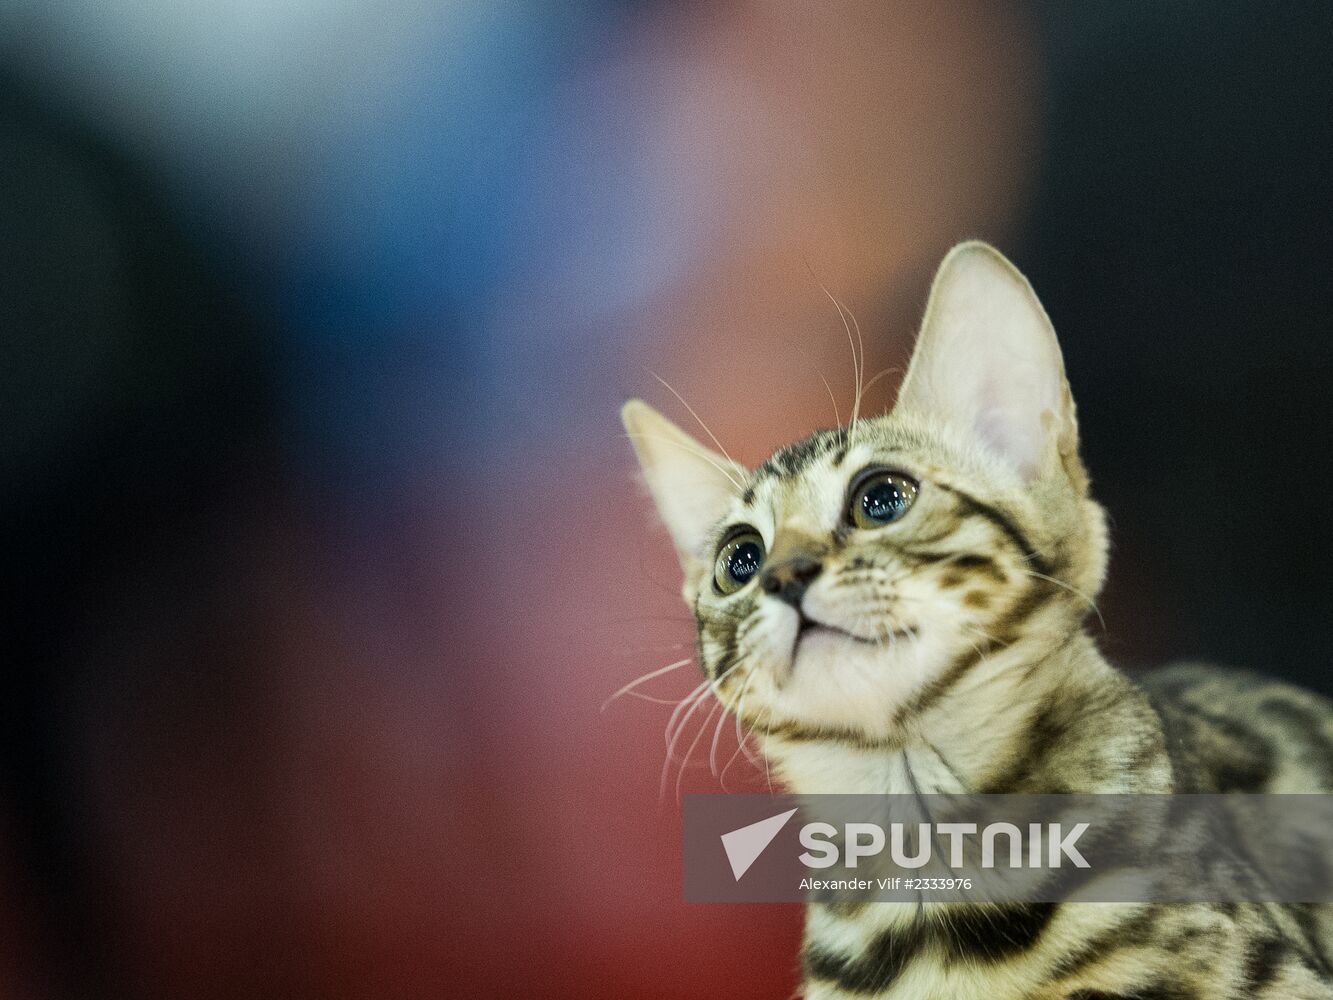 Grand Prix Royal Canin 2013 international cat show